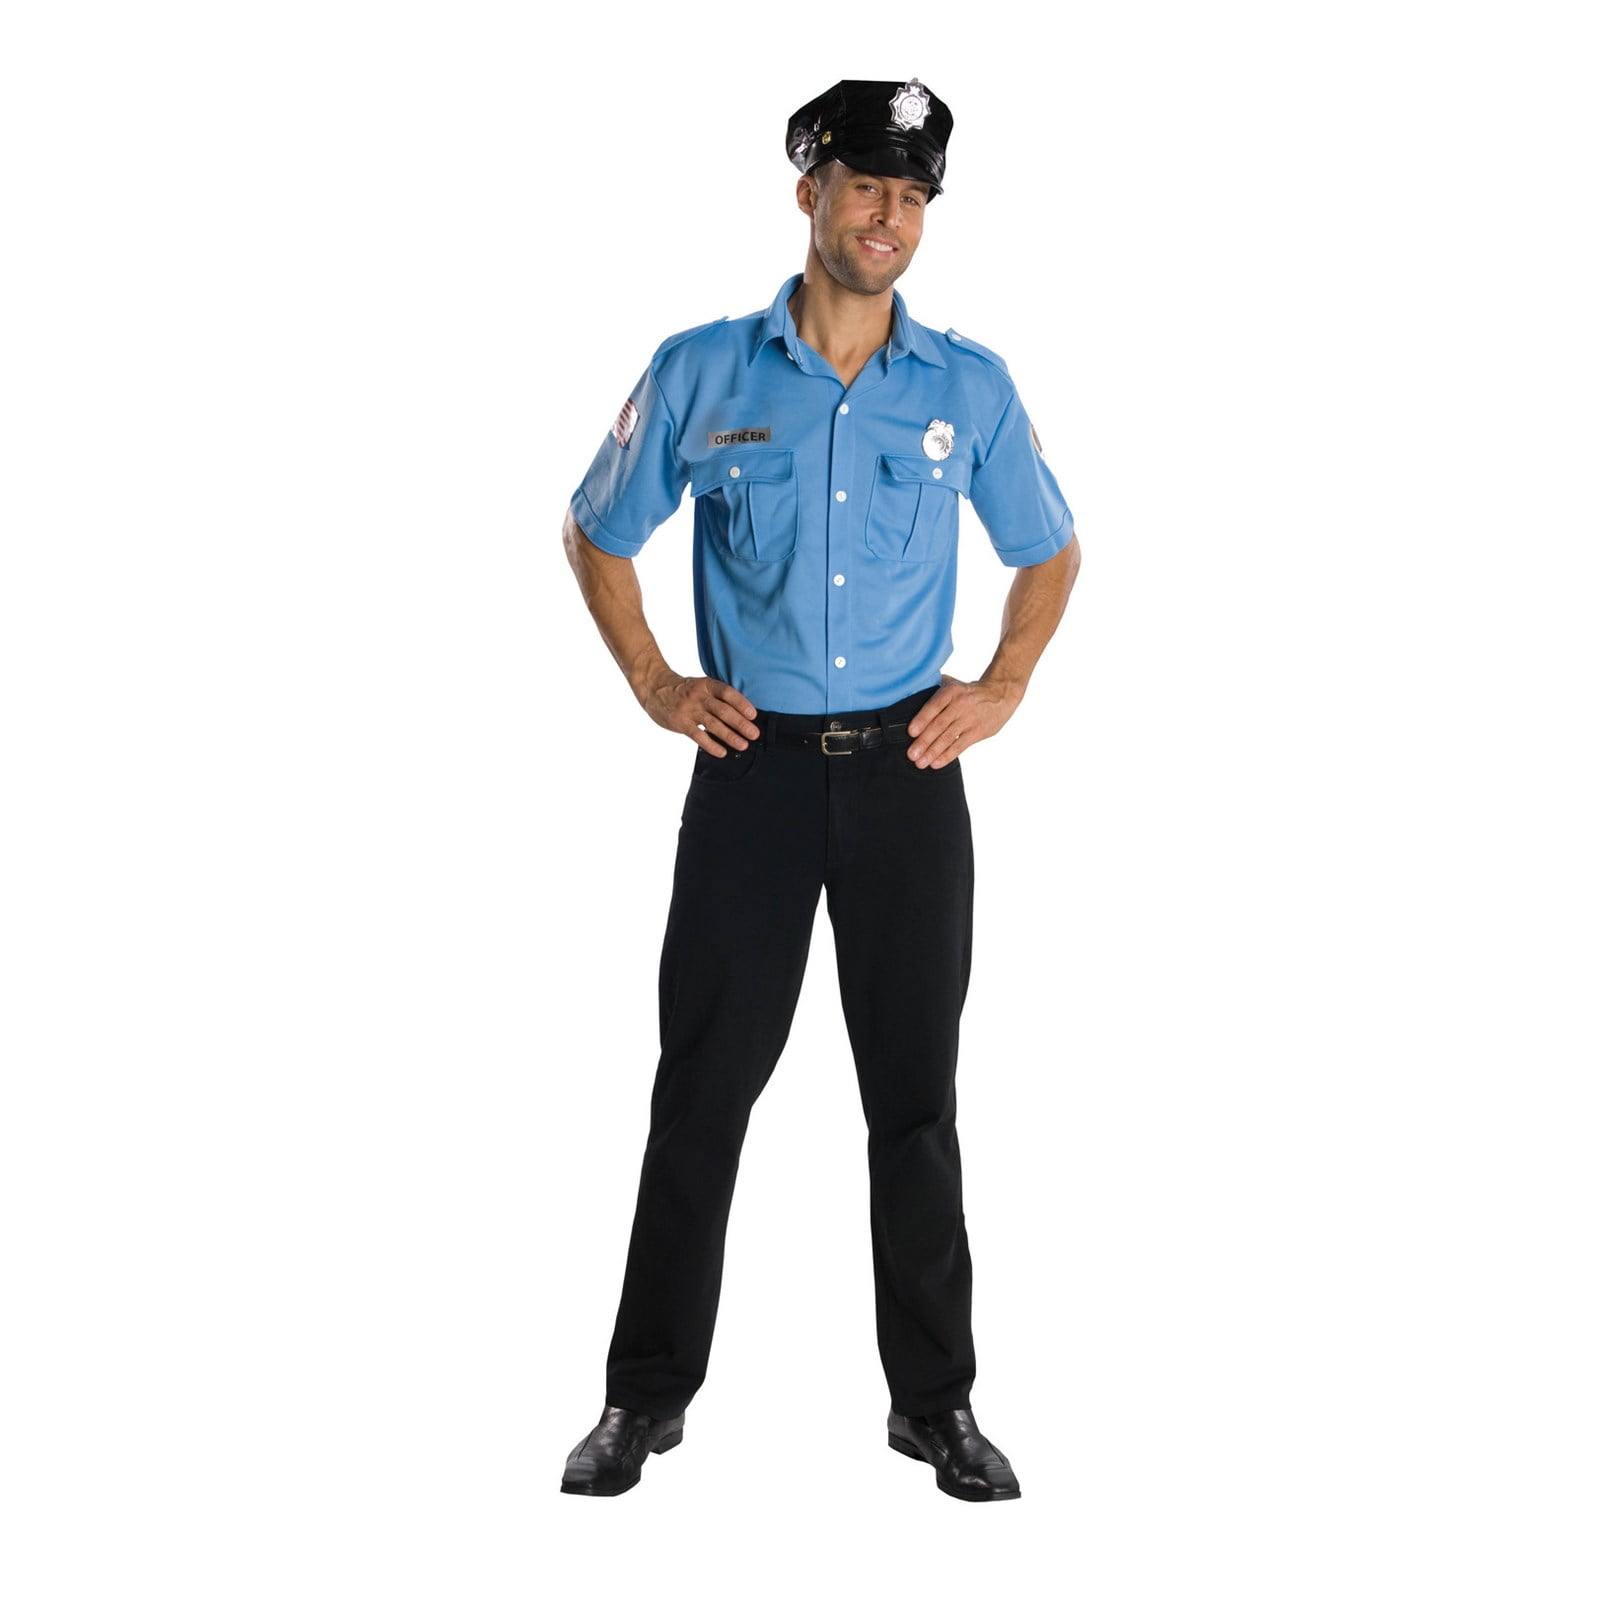 Police Officer Adult Costume - Walmart.com